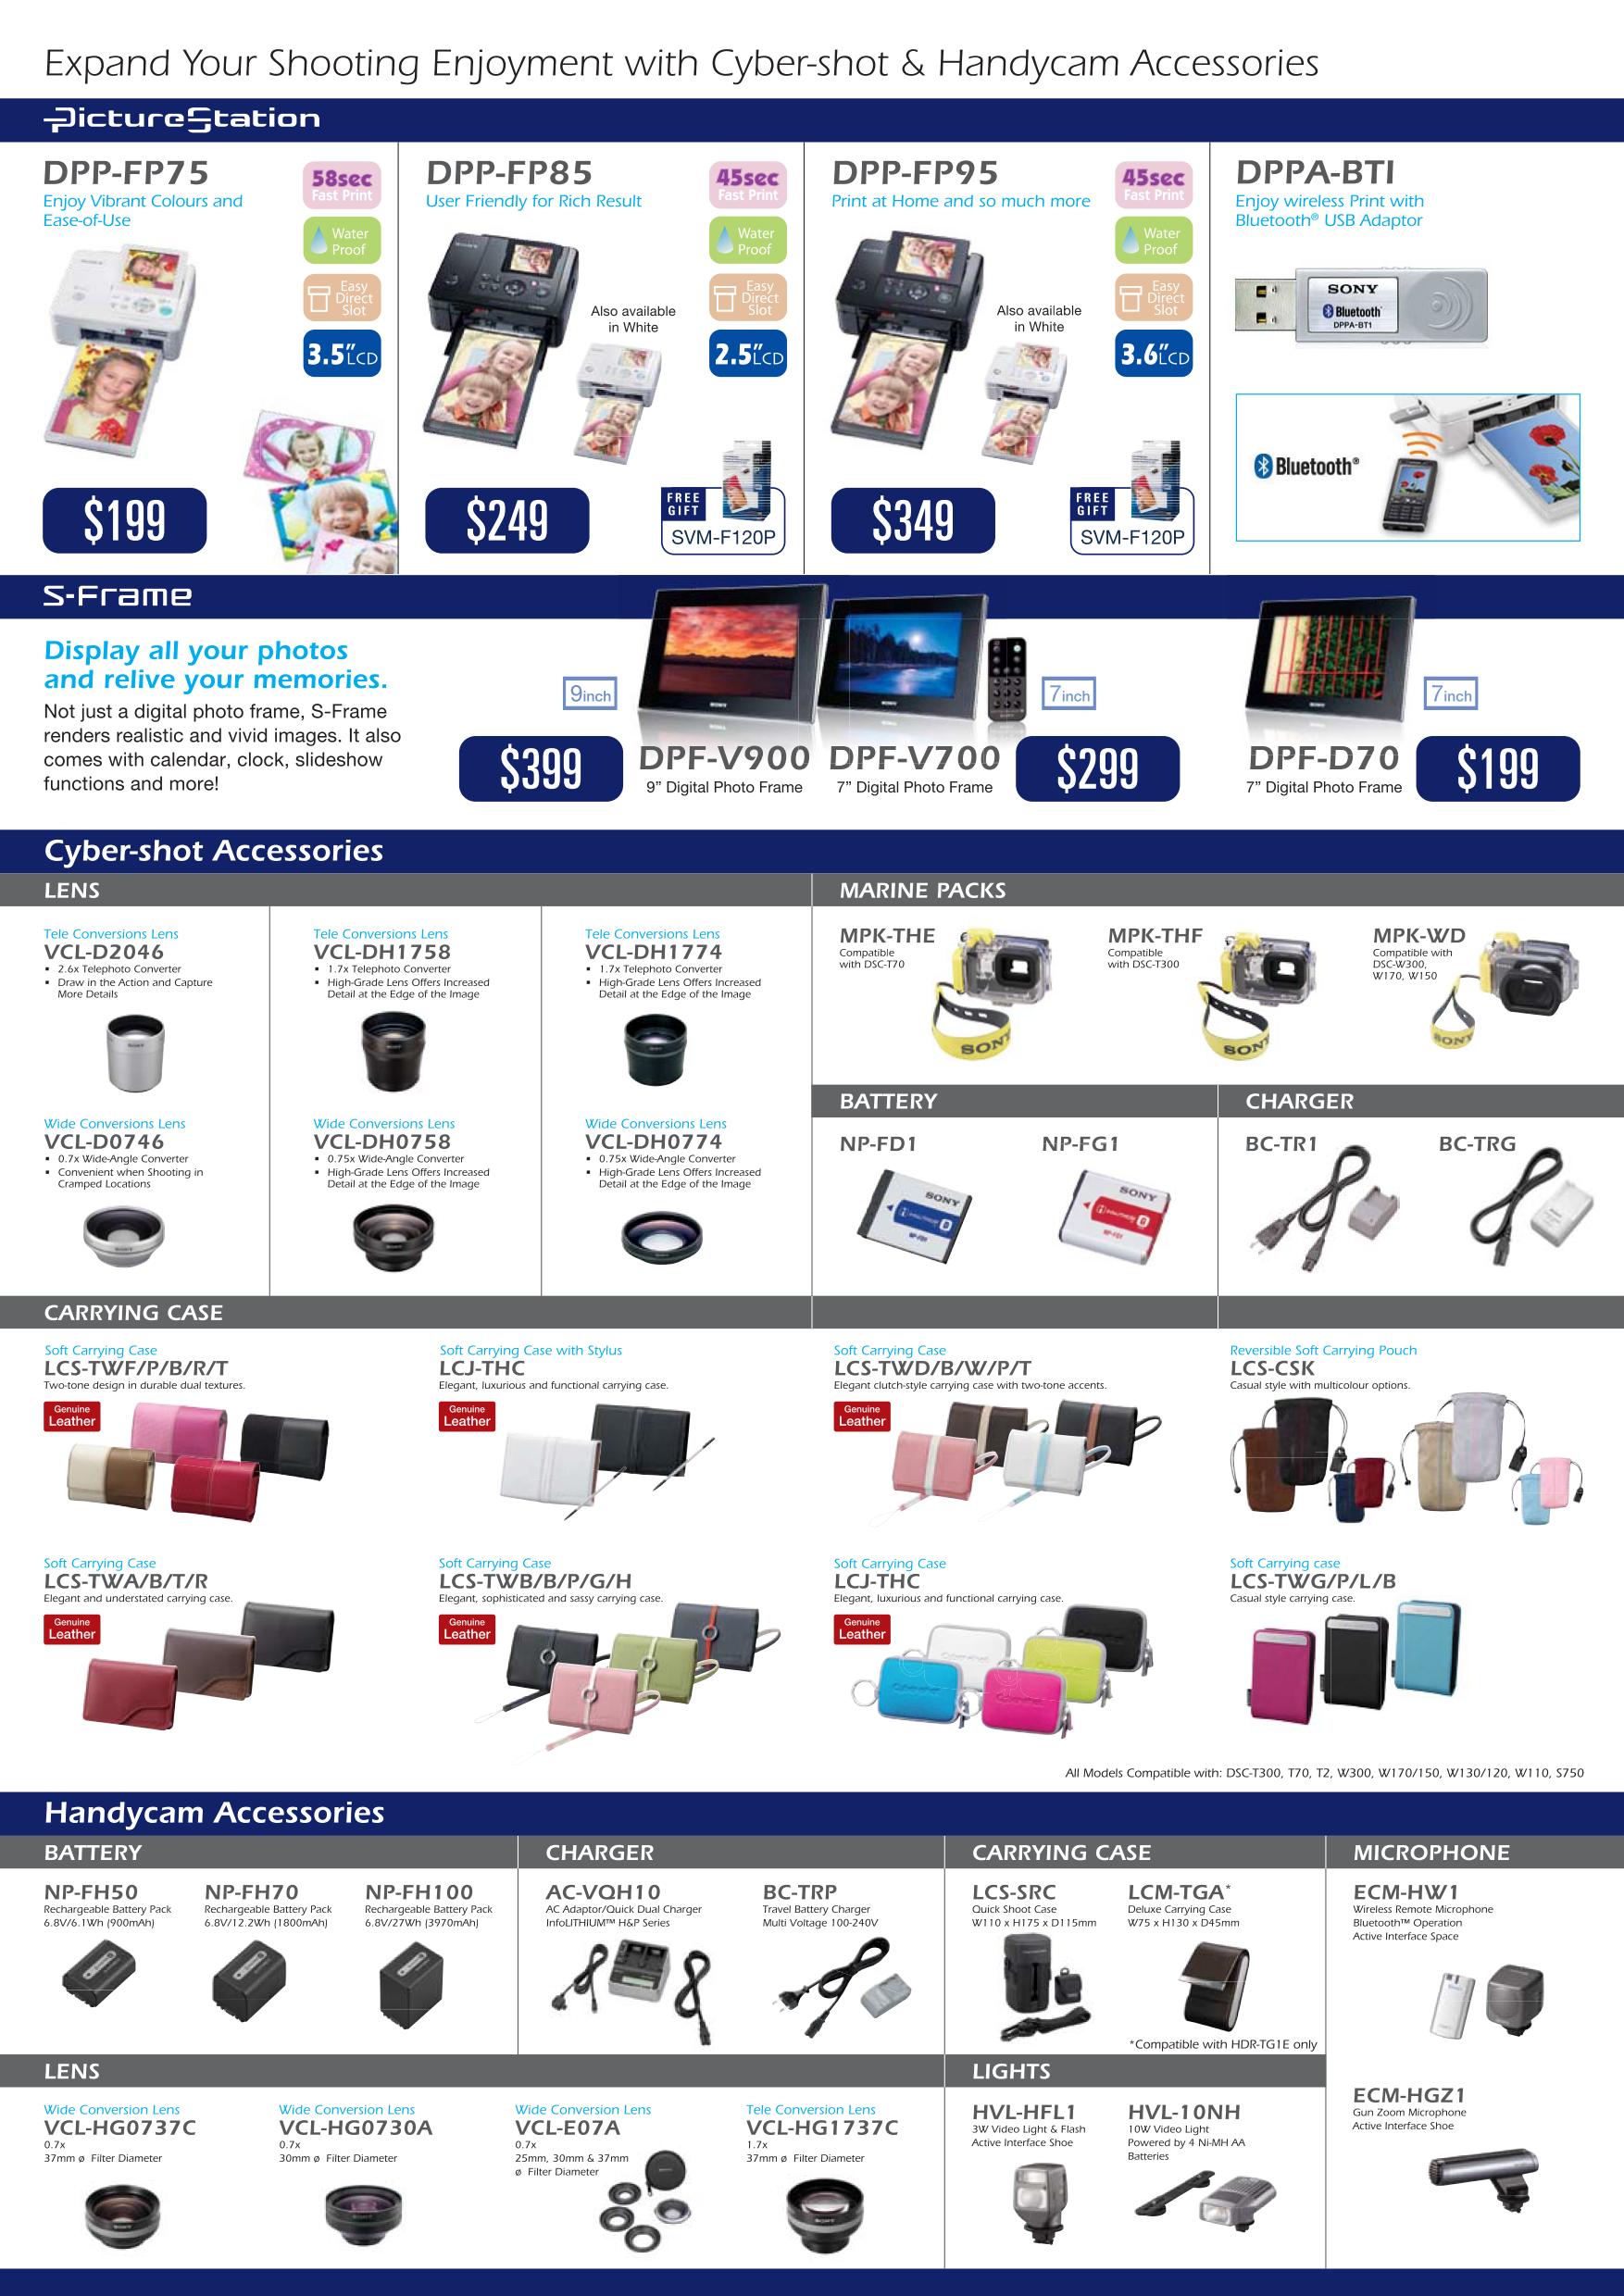 PC Show 2008 price list image brochure of Sony Cybershot.pdf 02 (1)